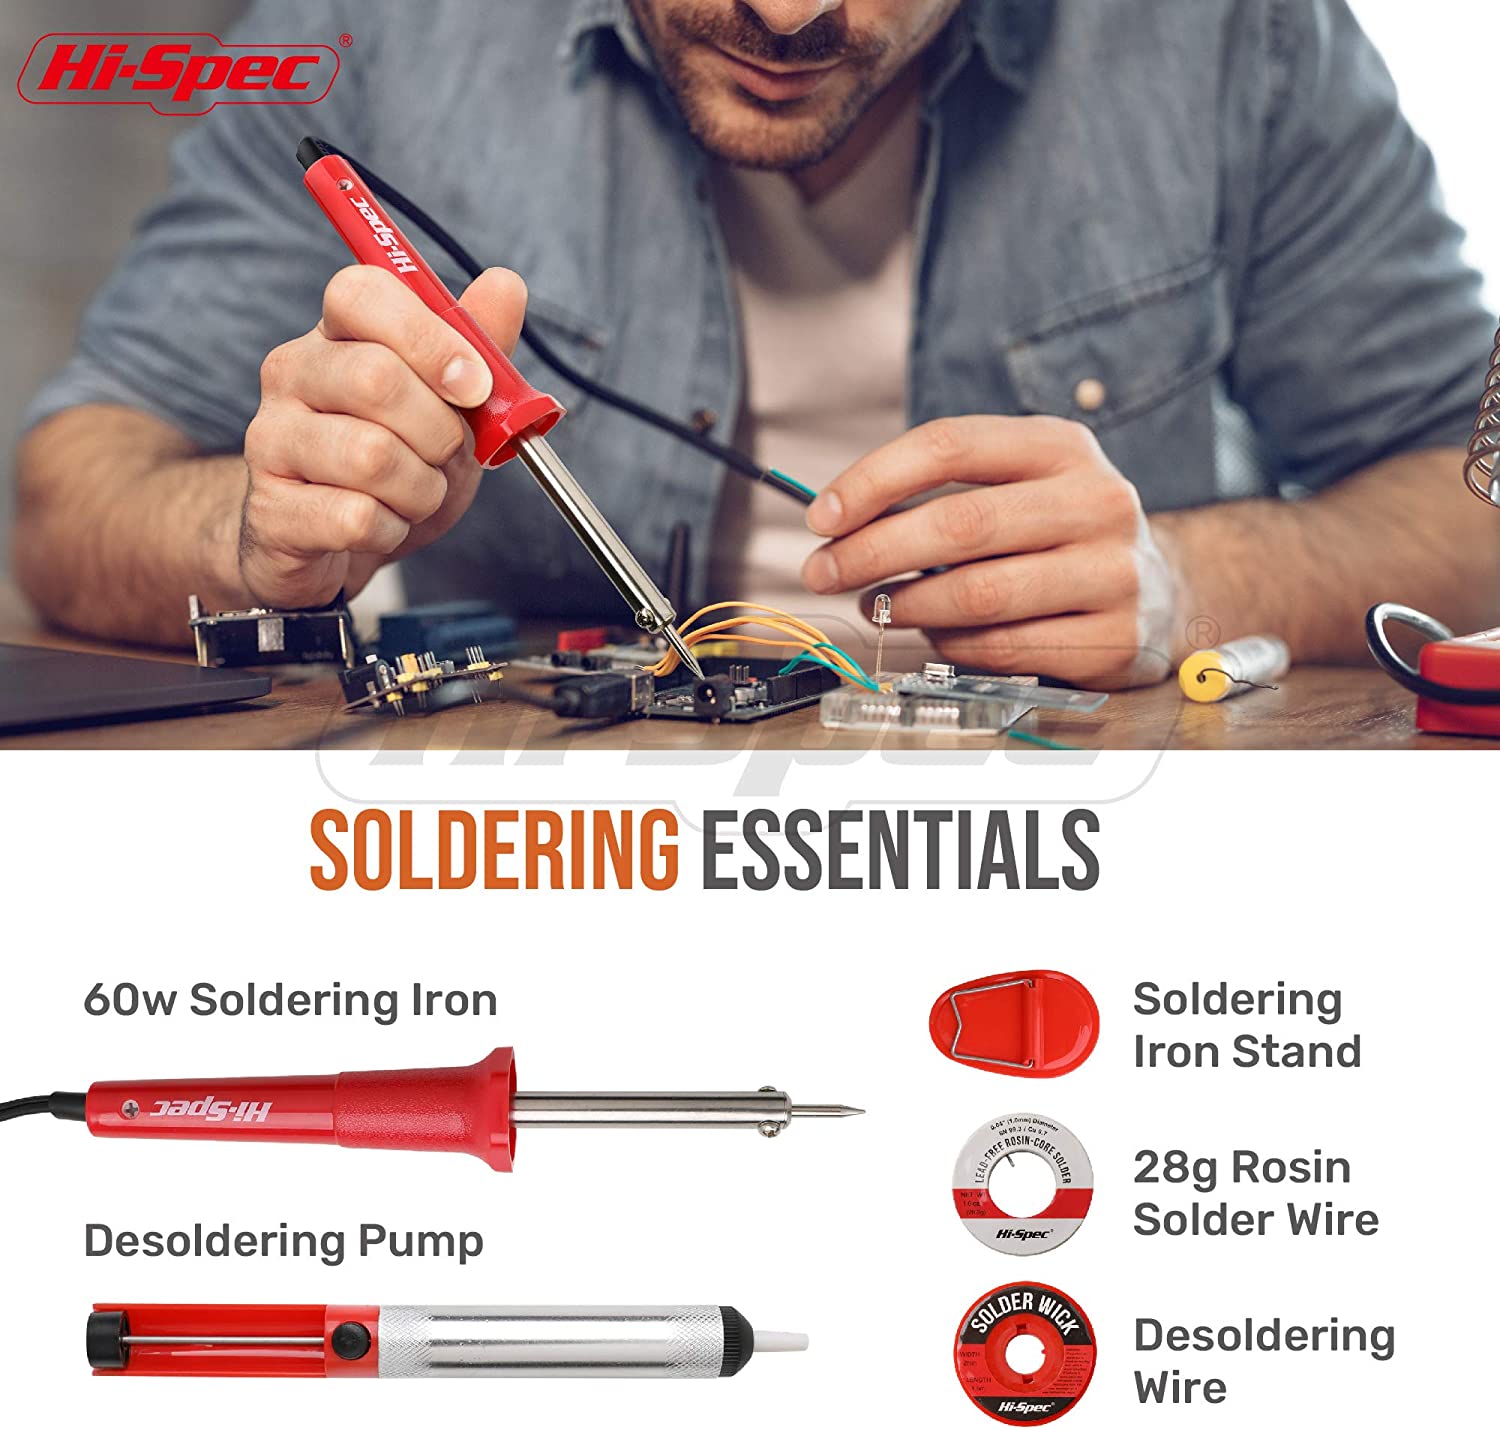  Hi-Spec 60pc Electronics & Solder Iron Kit. Tools